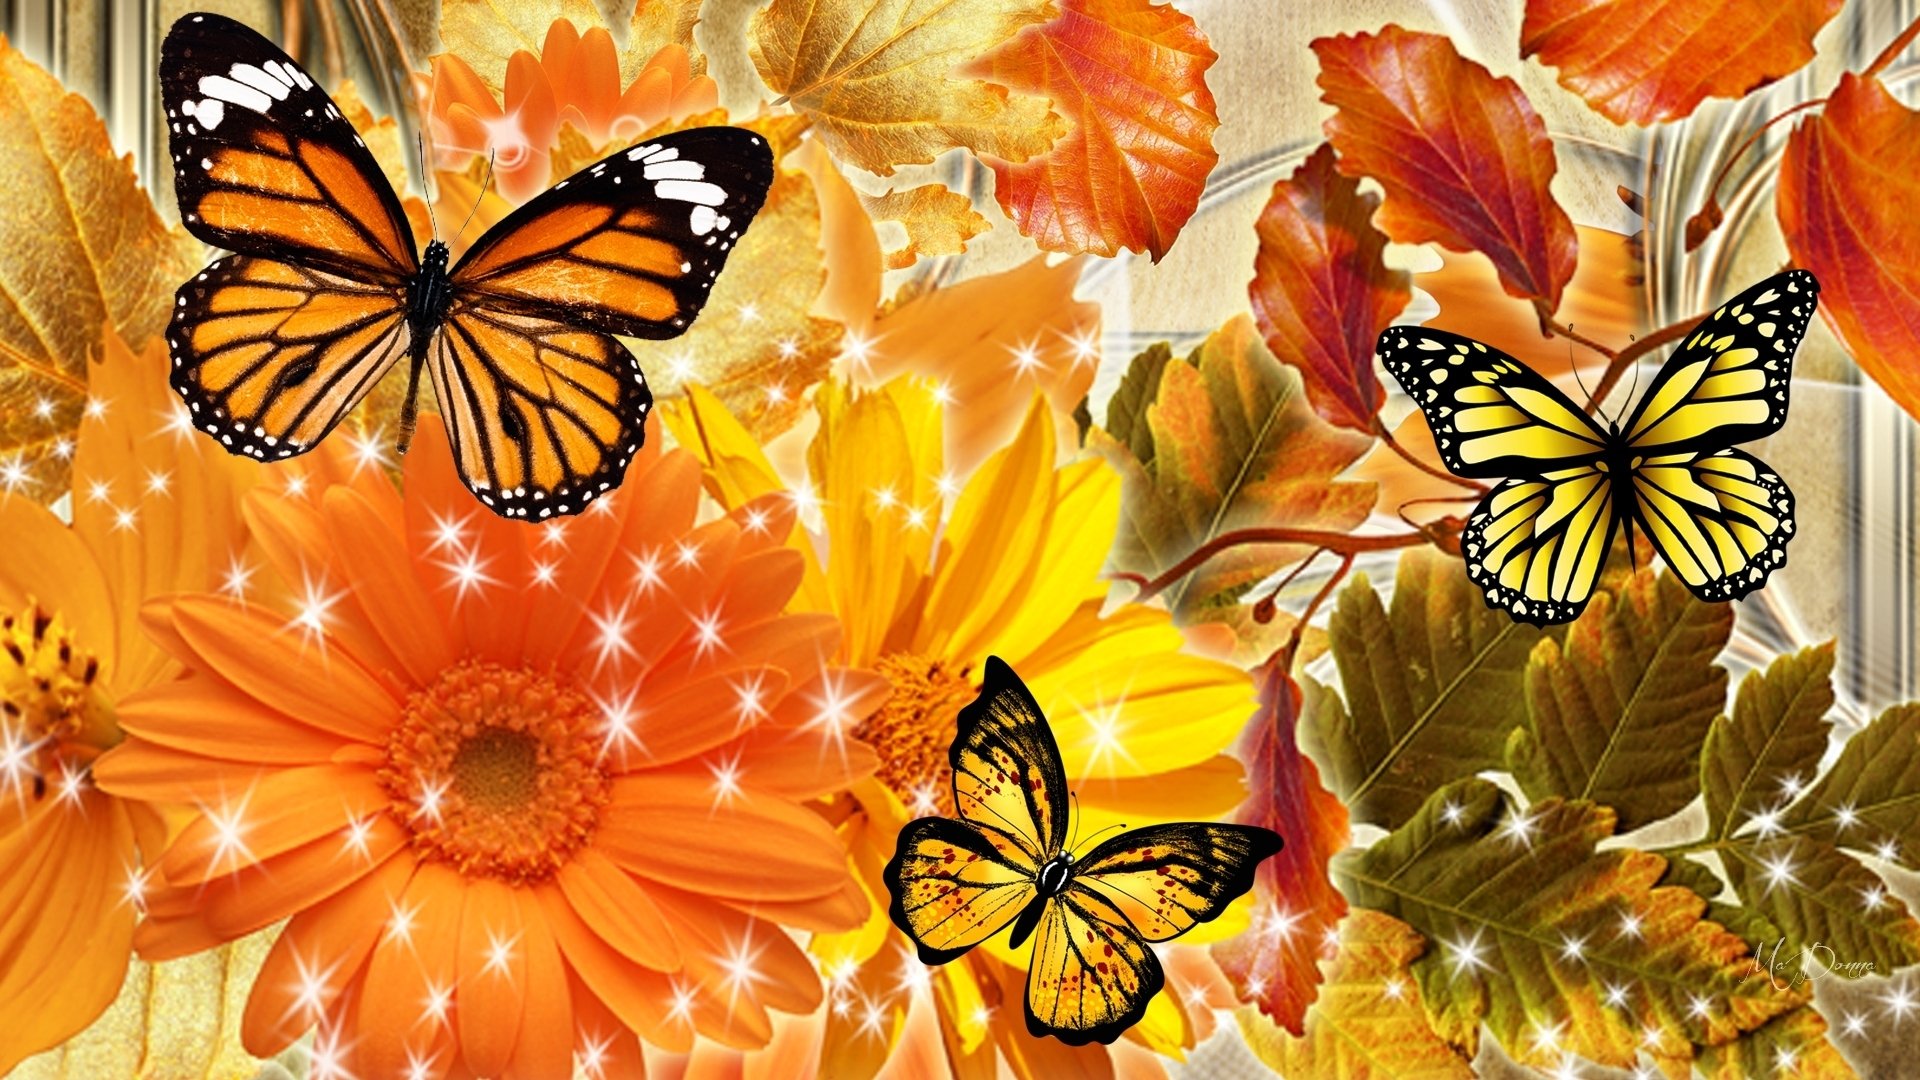 Autumn Flowers and Butterflies